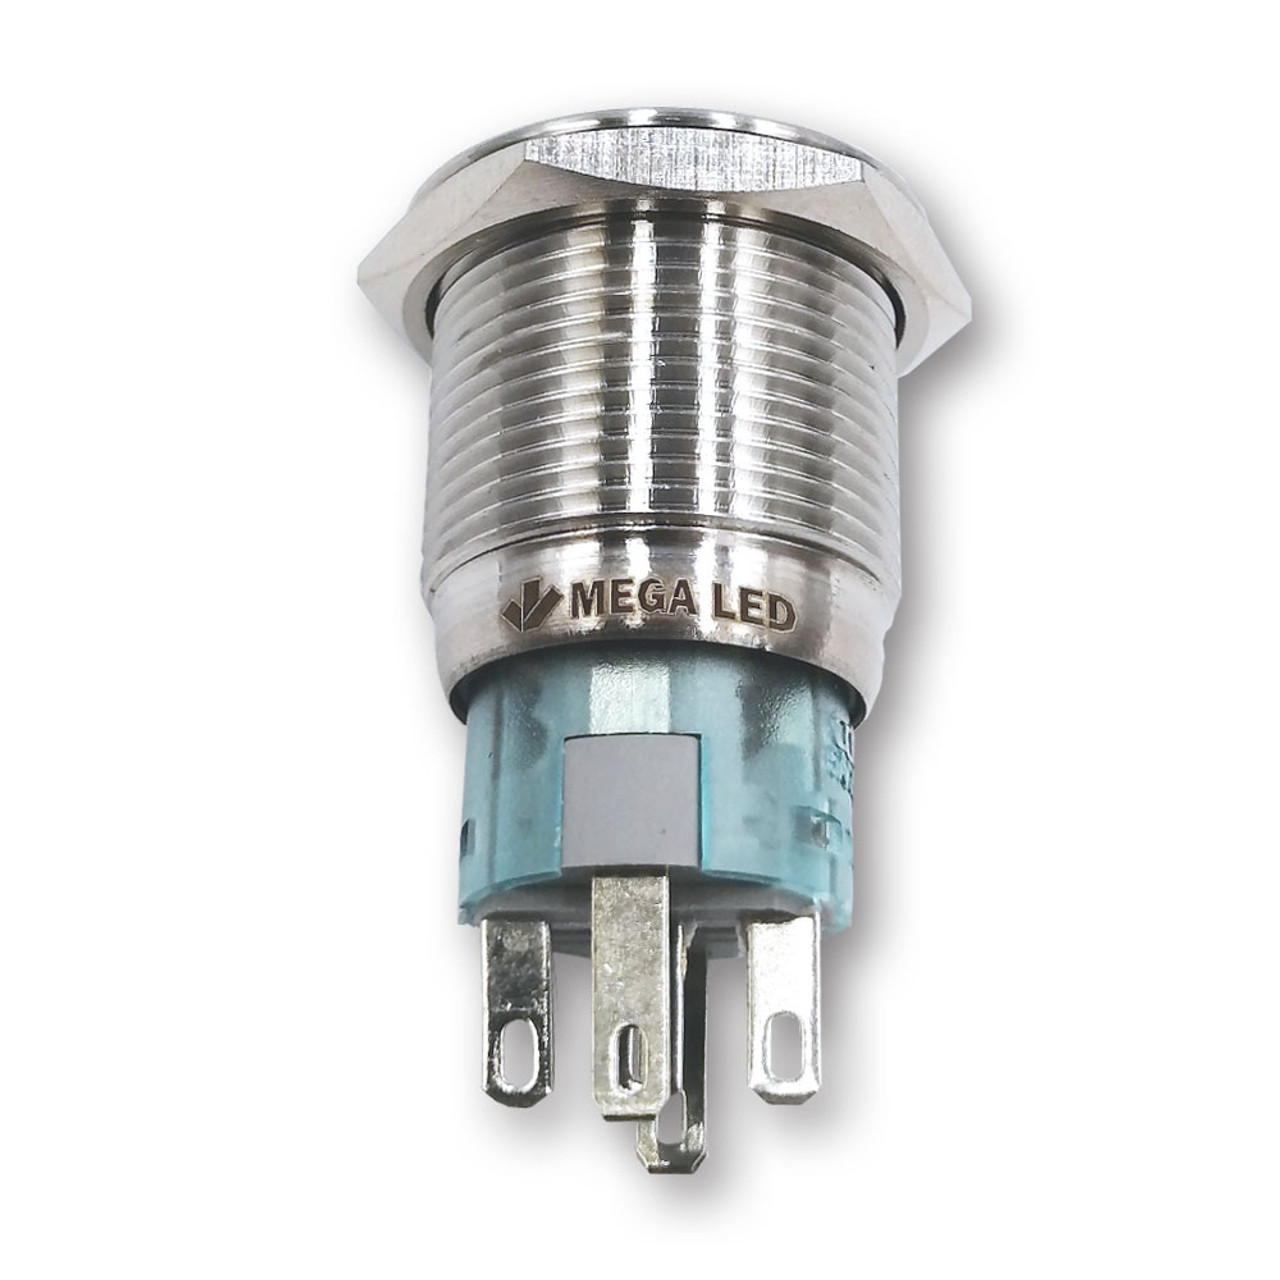 Mega LED - Push Button - Waterproof IP67, Stainless Steel, Latching Illuminated, 24V, Blue, Green LED (32358-G24Li) - Apollo Lighting